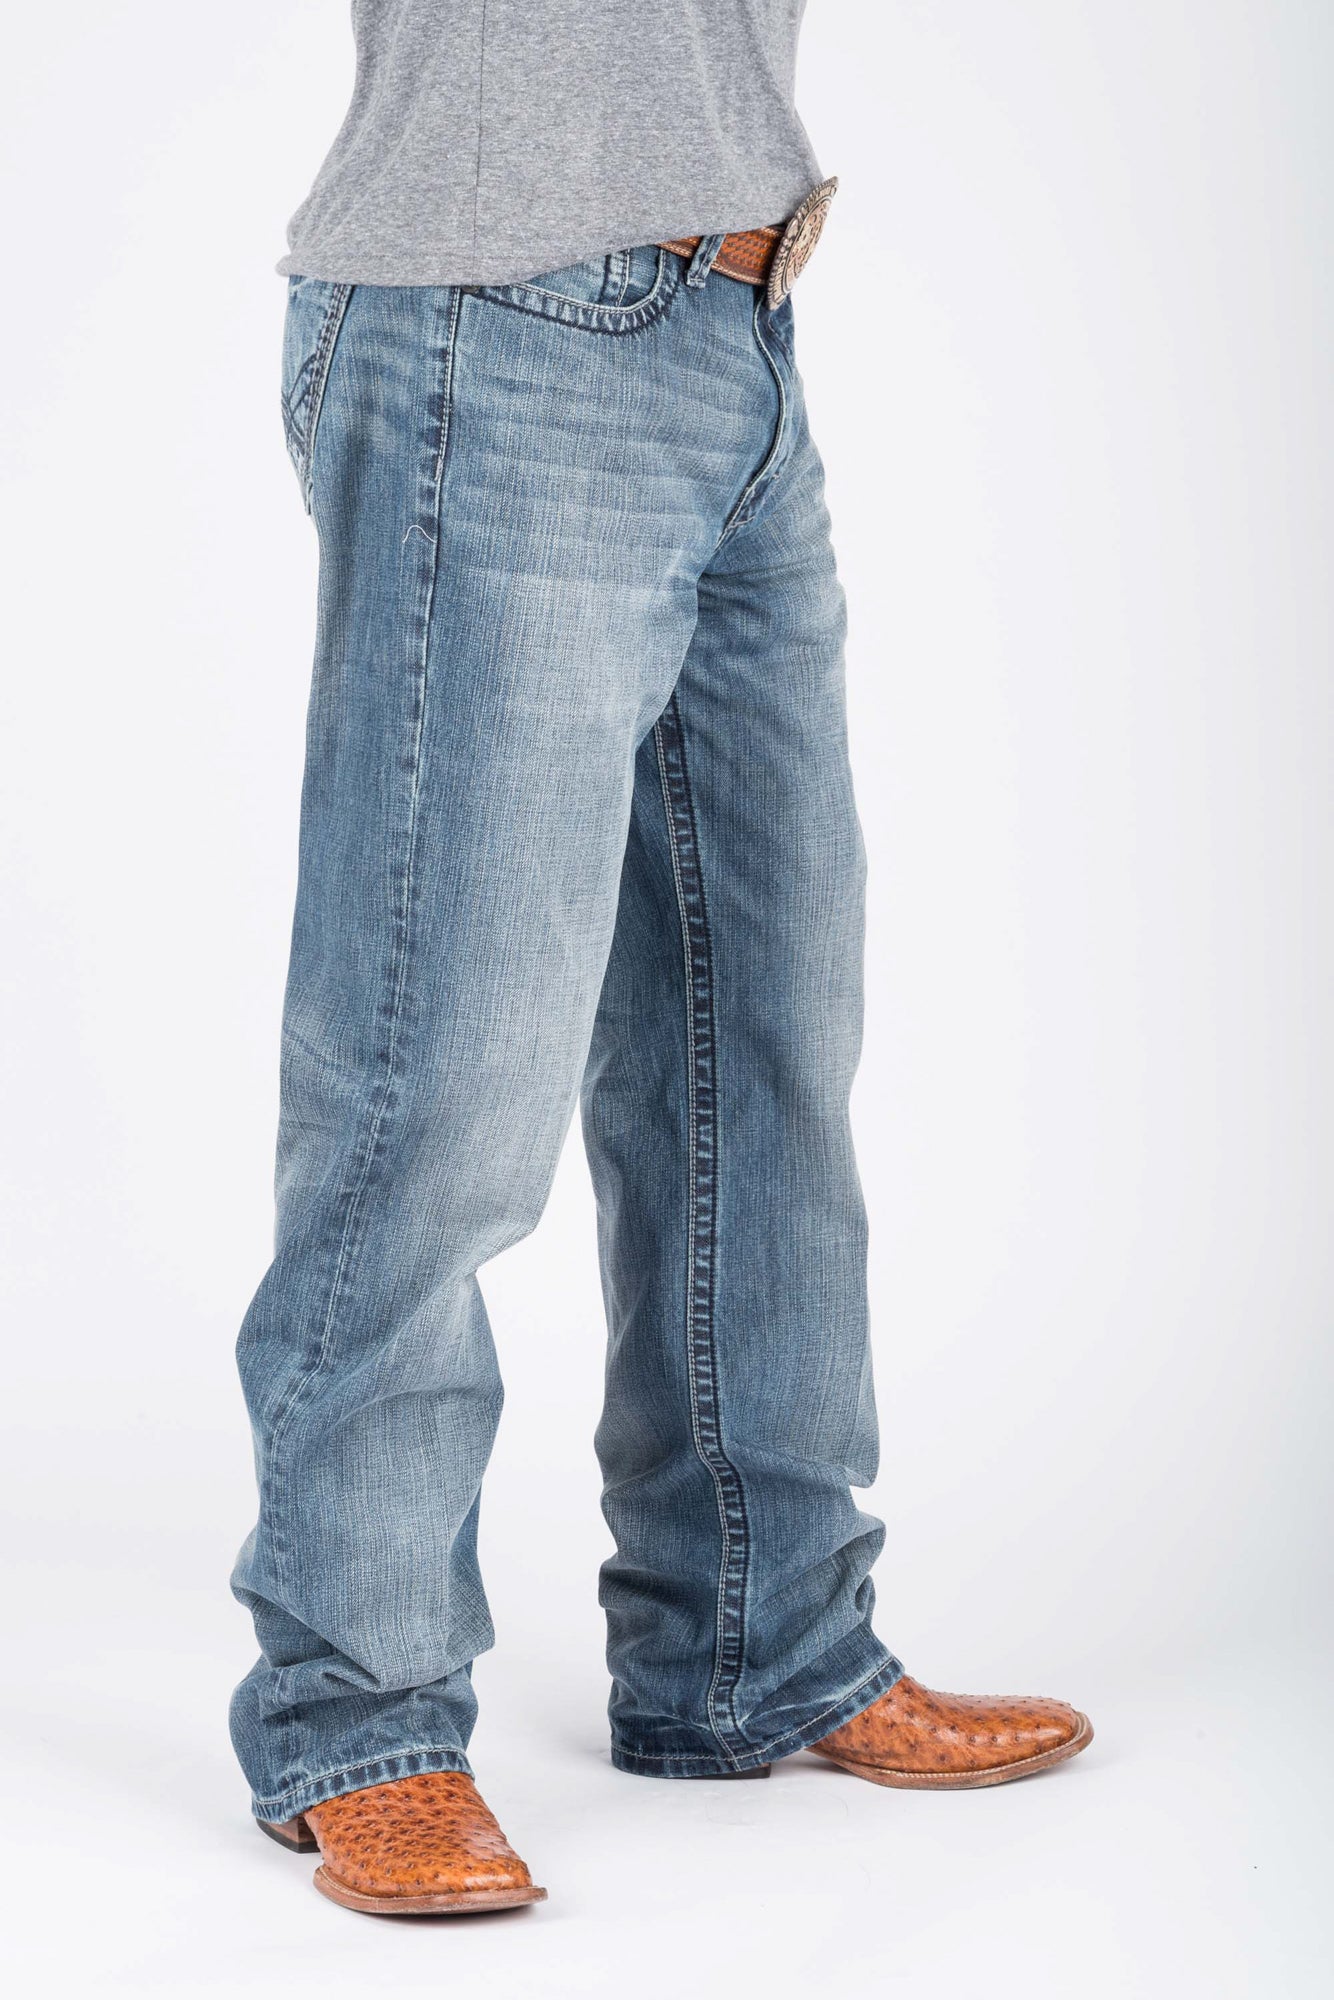 Tin Haul Mens Blue 100% Cotton Lined Deco Stitch Jeans – The